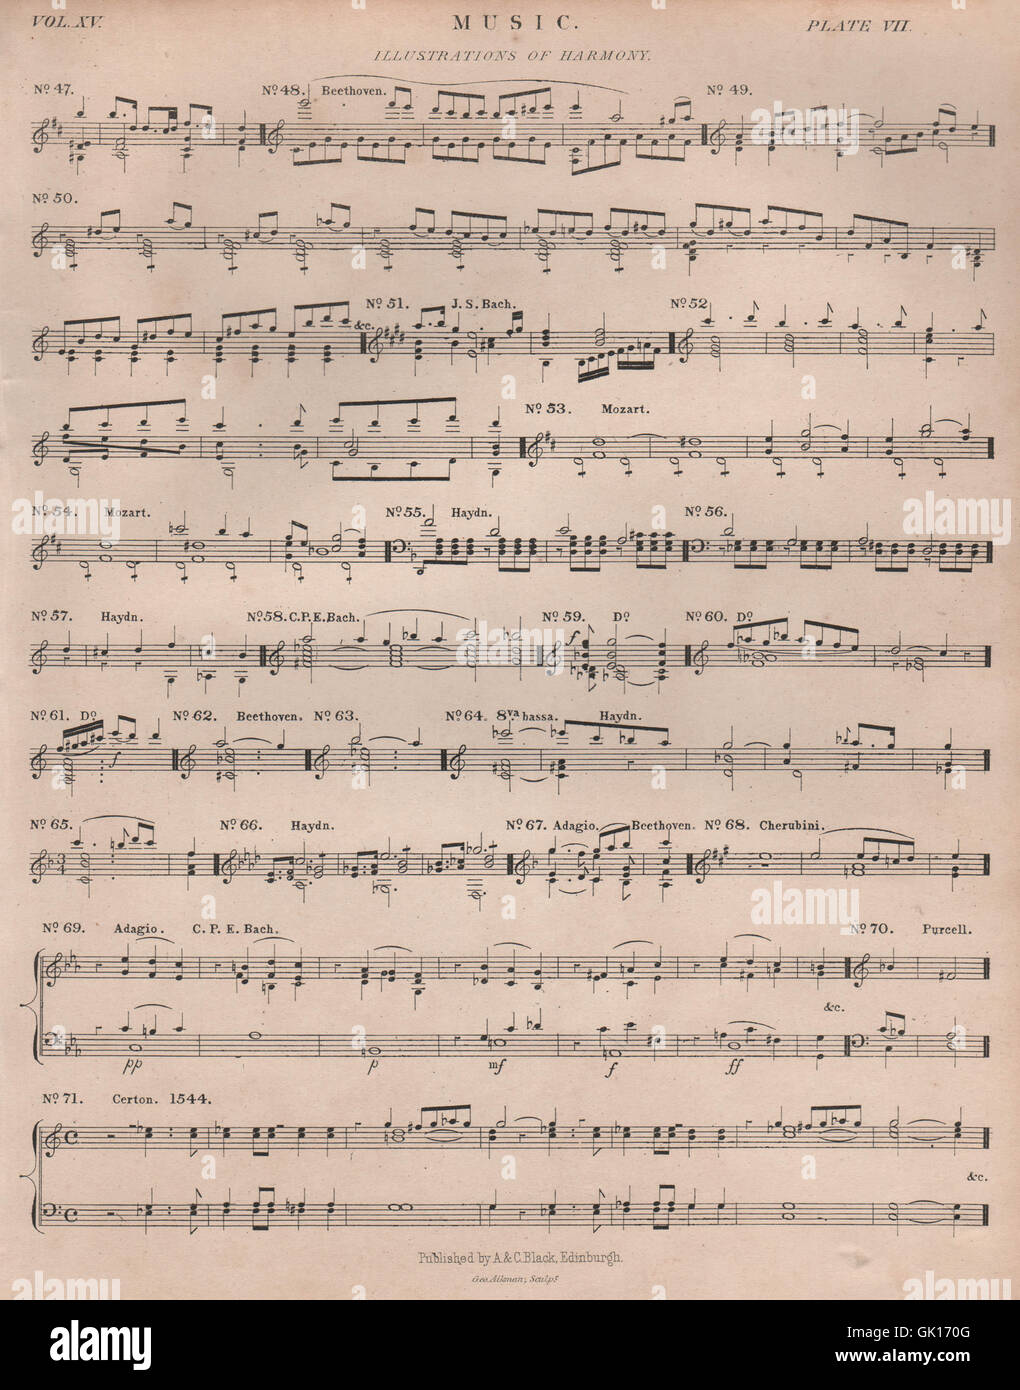 Music. Illustrations of Harmony. Haydn Mozart Beethoven Bach Certon, 1860 Stock Photo